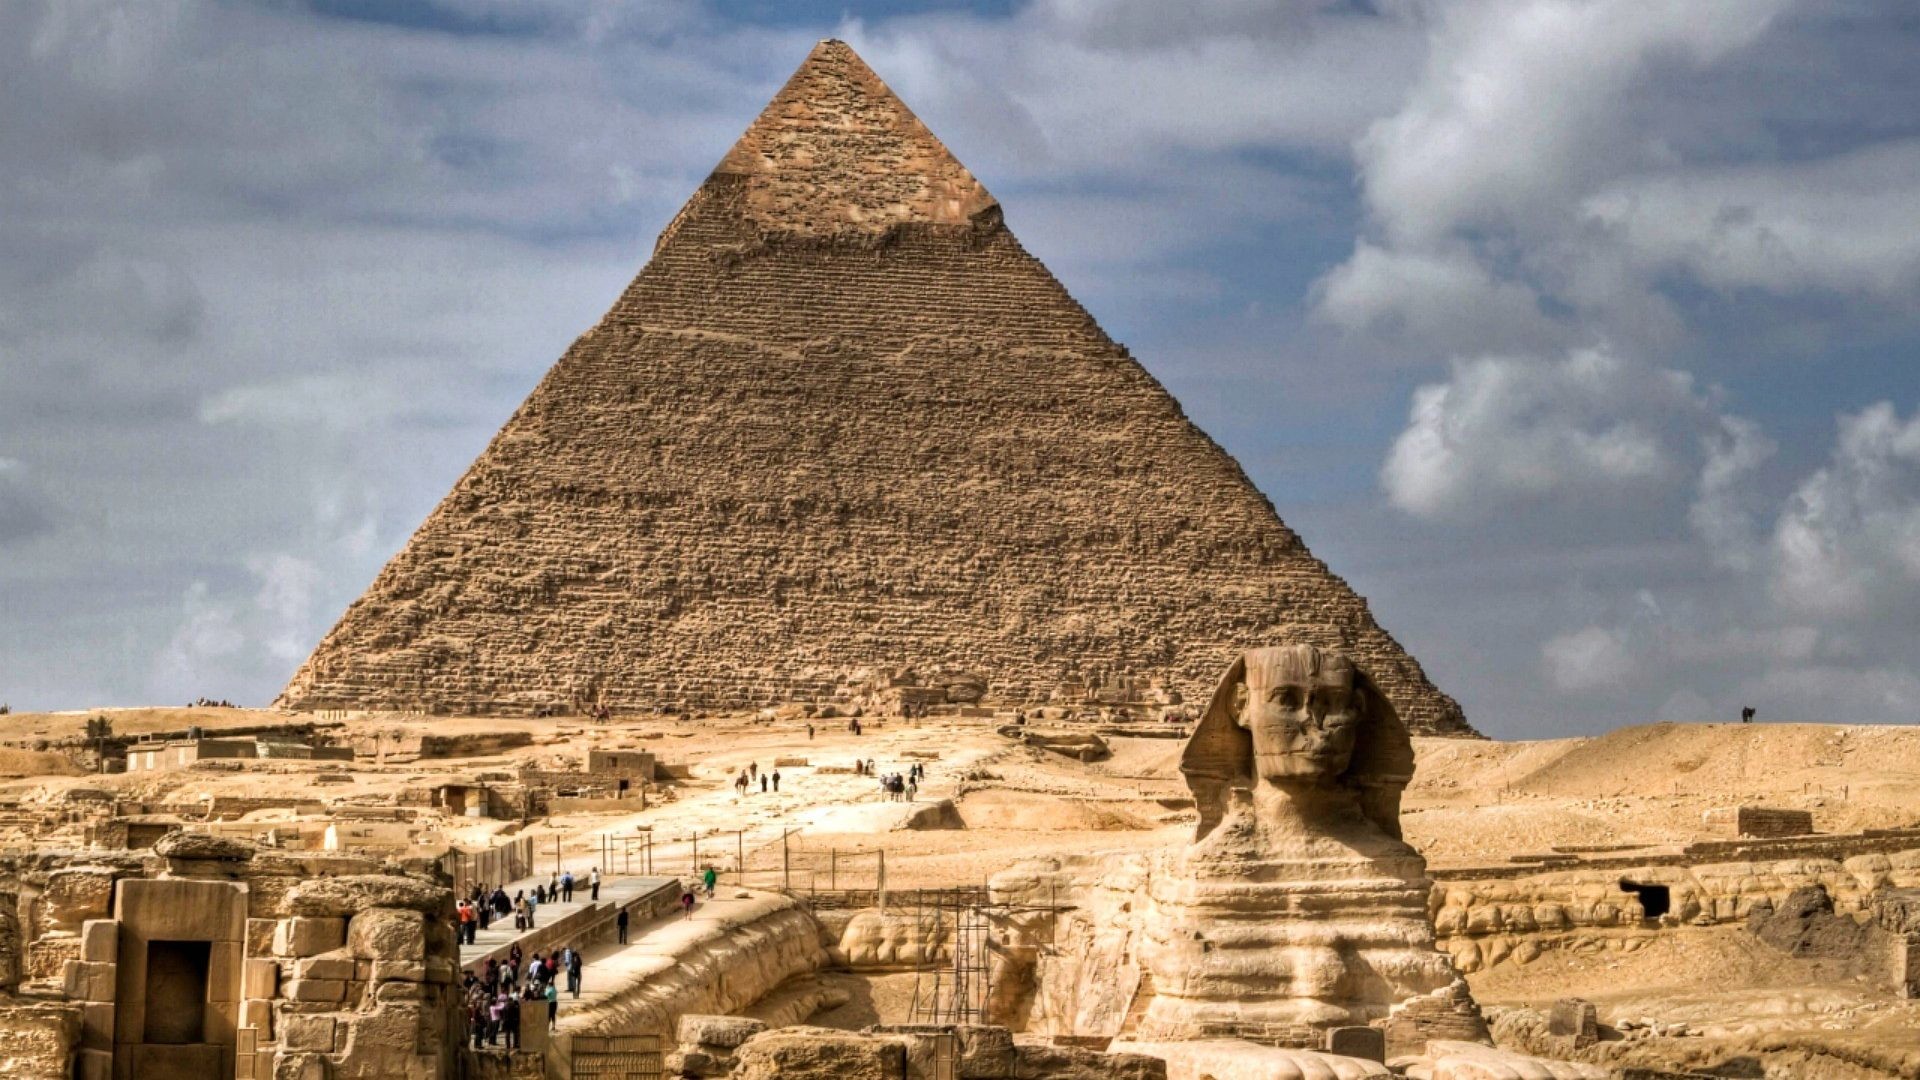 pyramids of giza wallpaper,pyramid,ancient history,landmark,monument,historic site